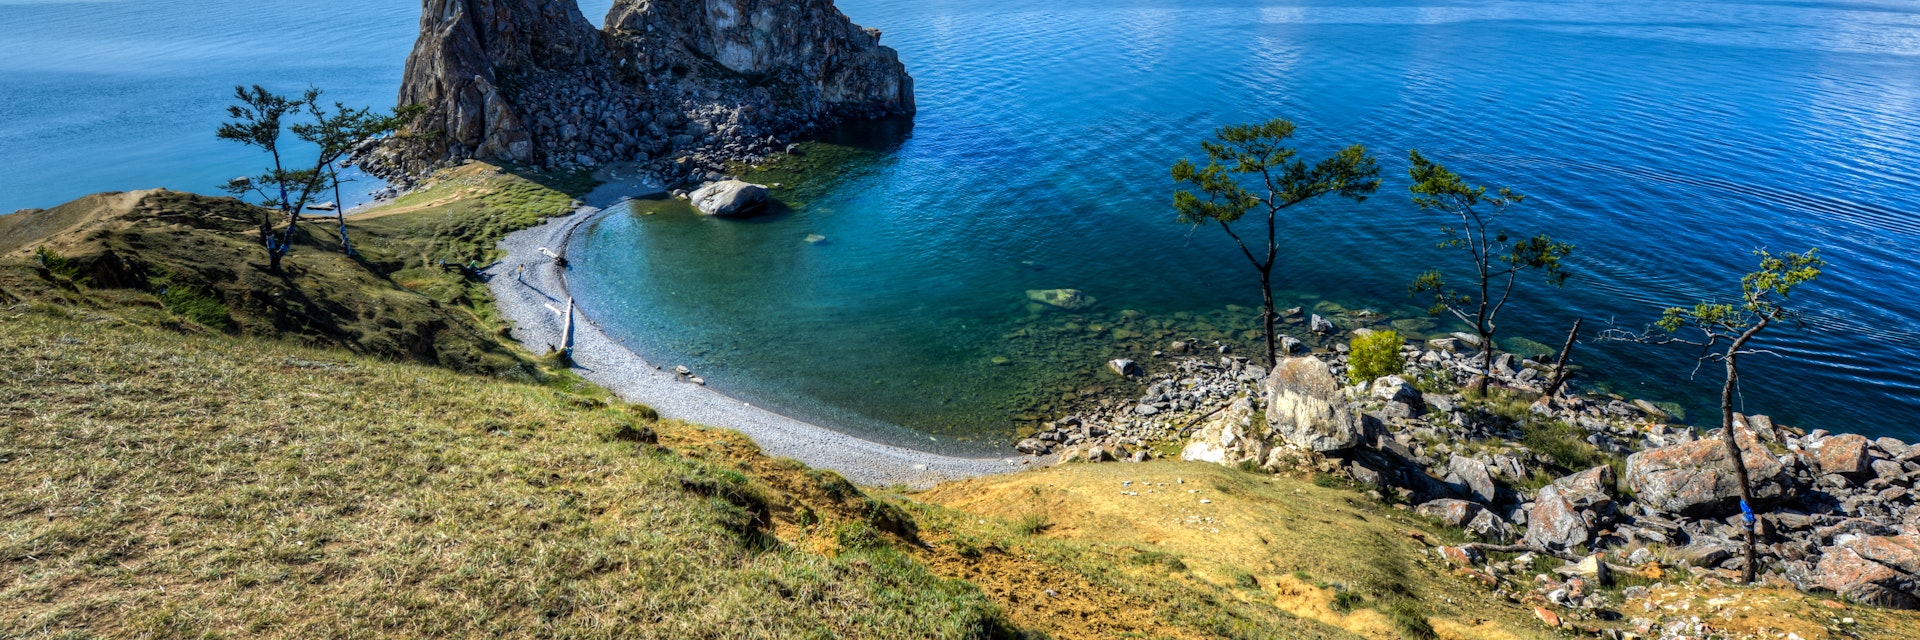 Shaman Rocks, Island of Olkhon, Lake Baikal, Russia.